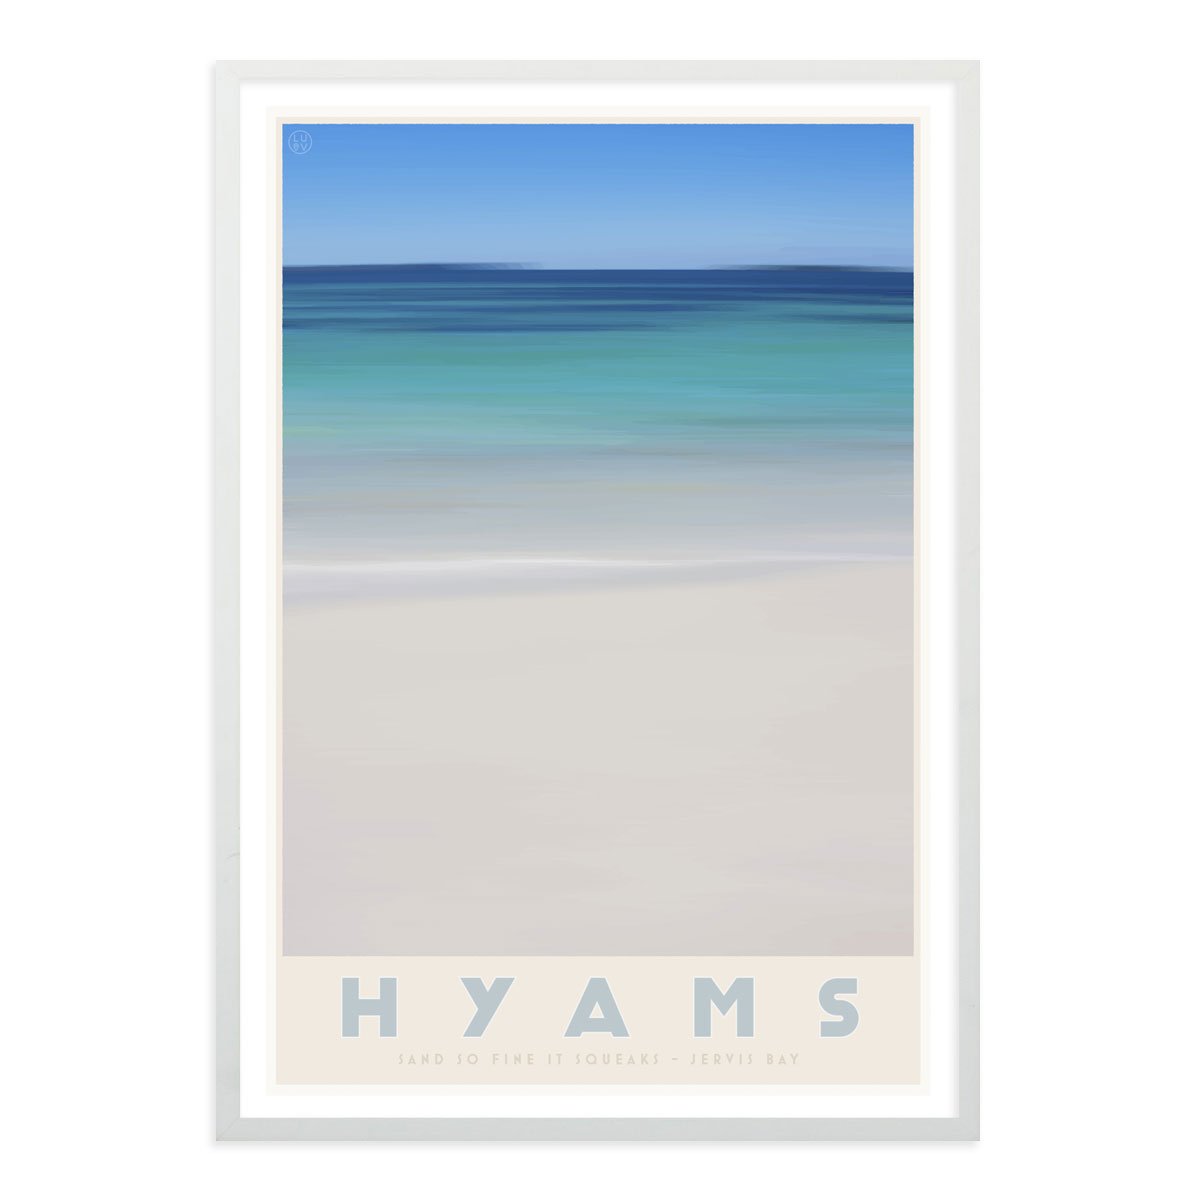 Hyams Beach white framed print. Vintage travel style. original design by places we luv